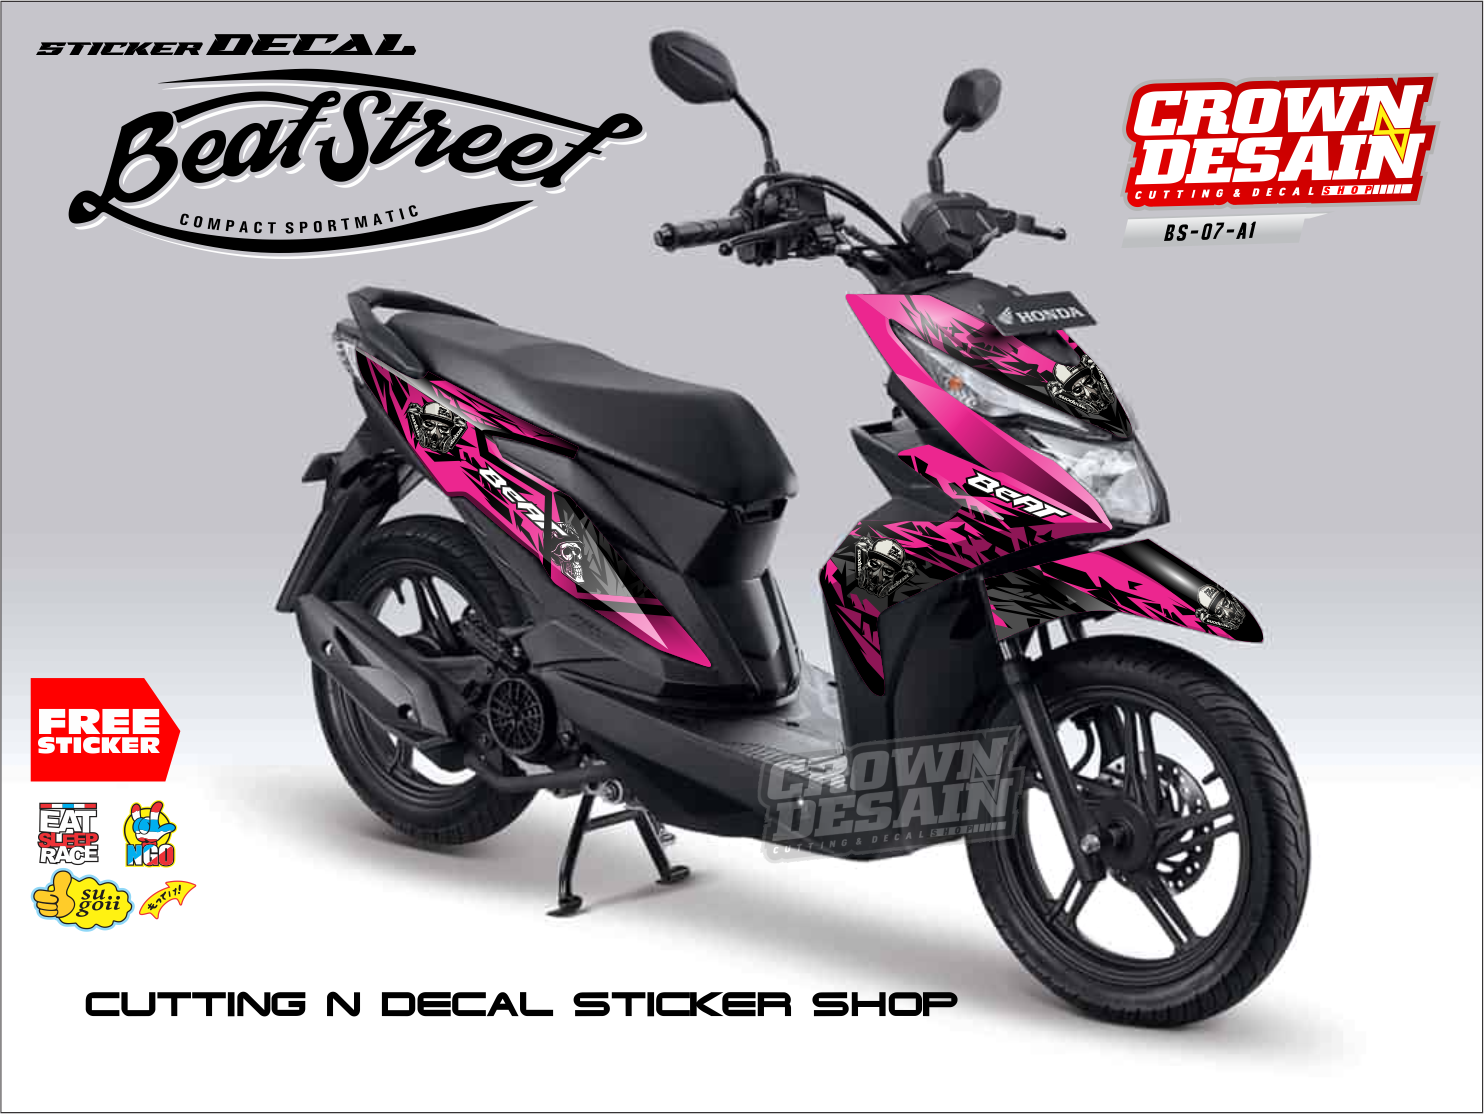 NEW LANCARS Aksesoris Stiker Decal Honda Beat Street Esp Variasi Sticker Full Body Honda Beat Street Esp Lazada Indonesia